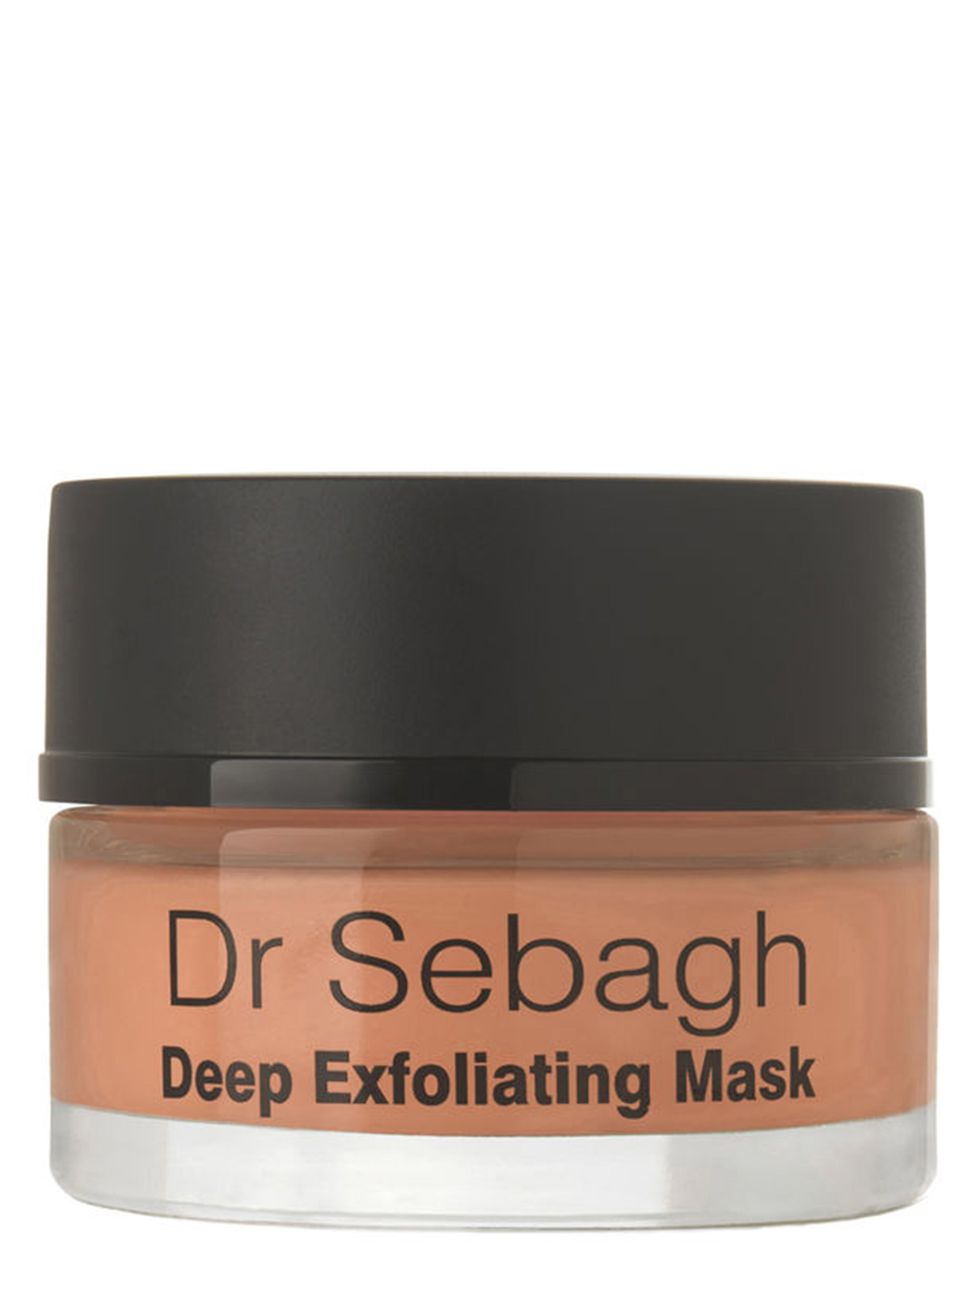 Dr Sebagh deep exfoliating mask